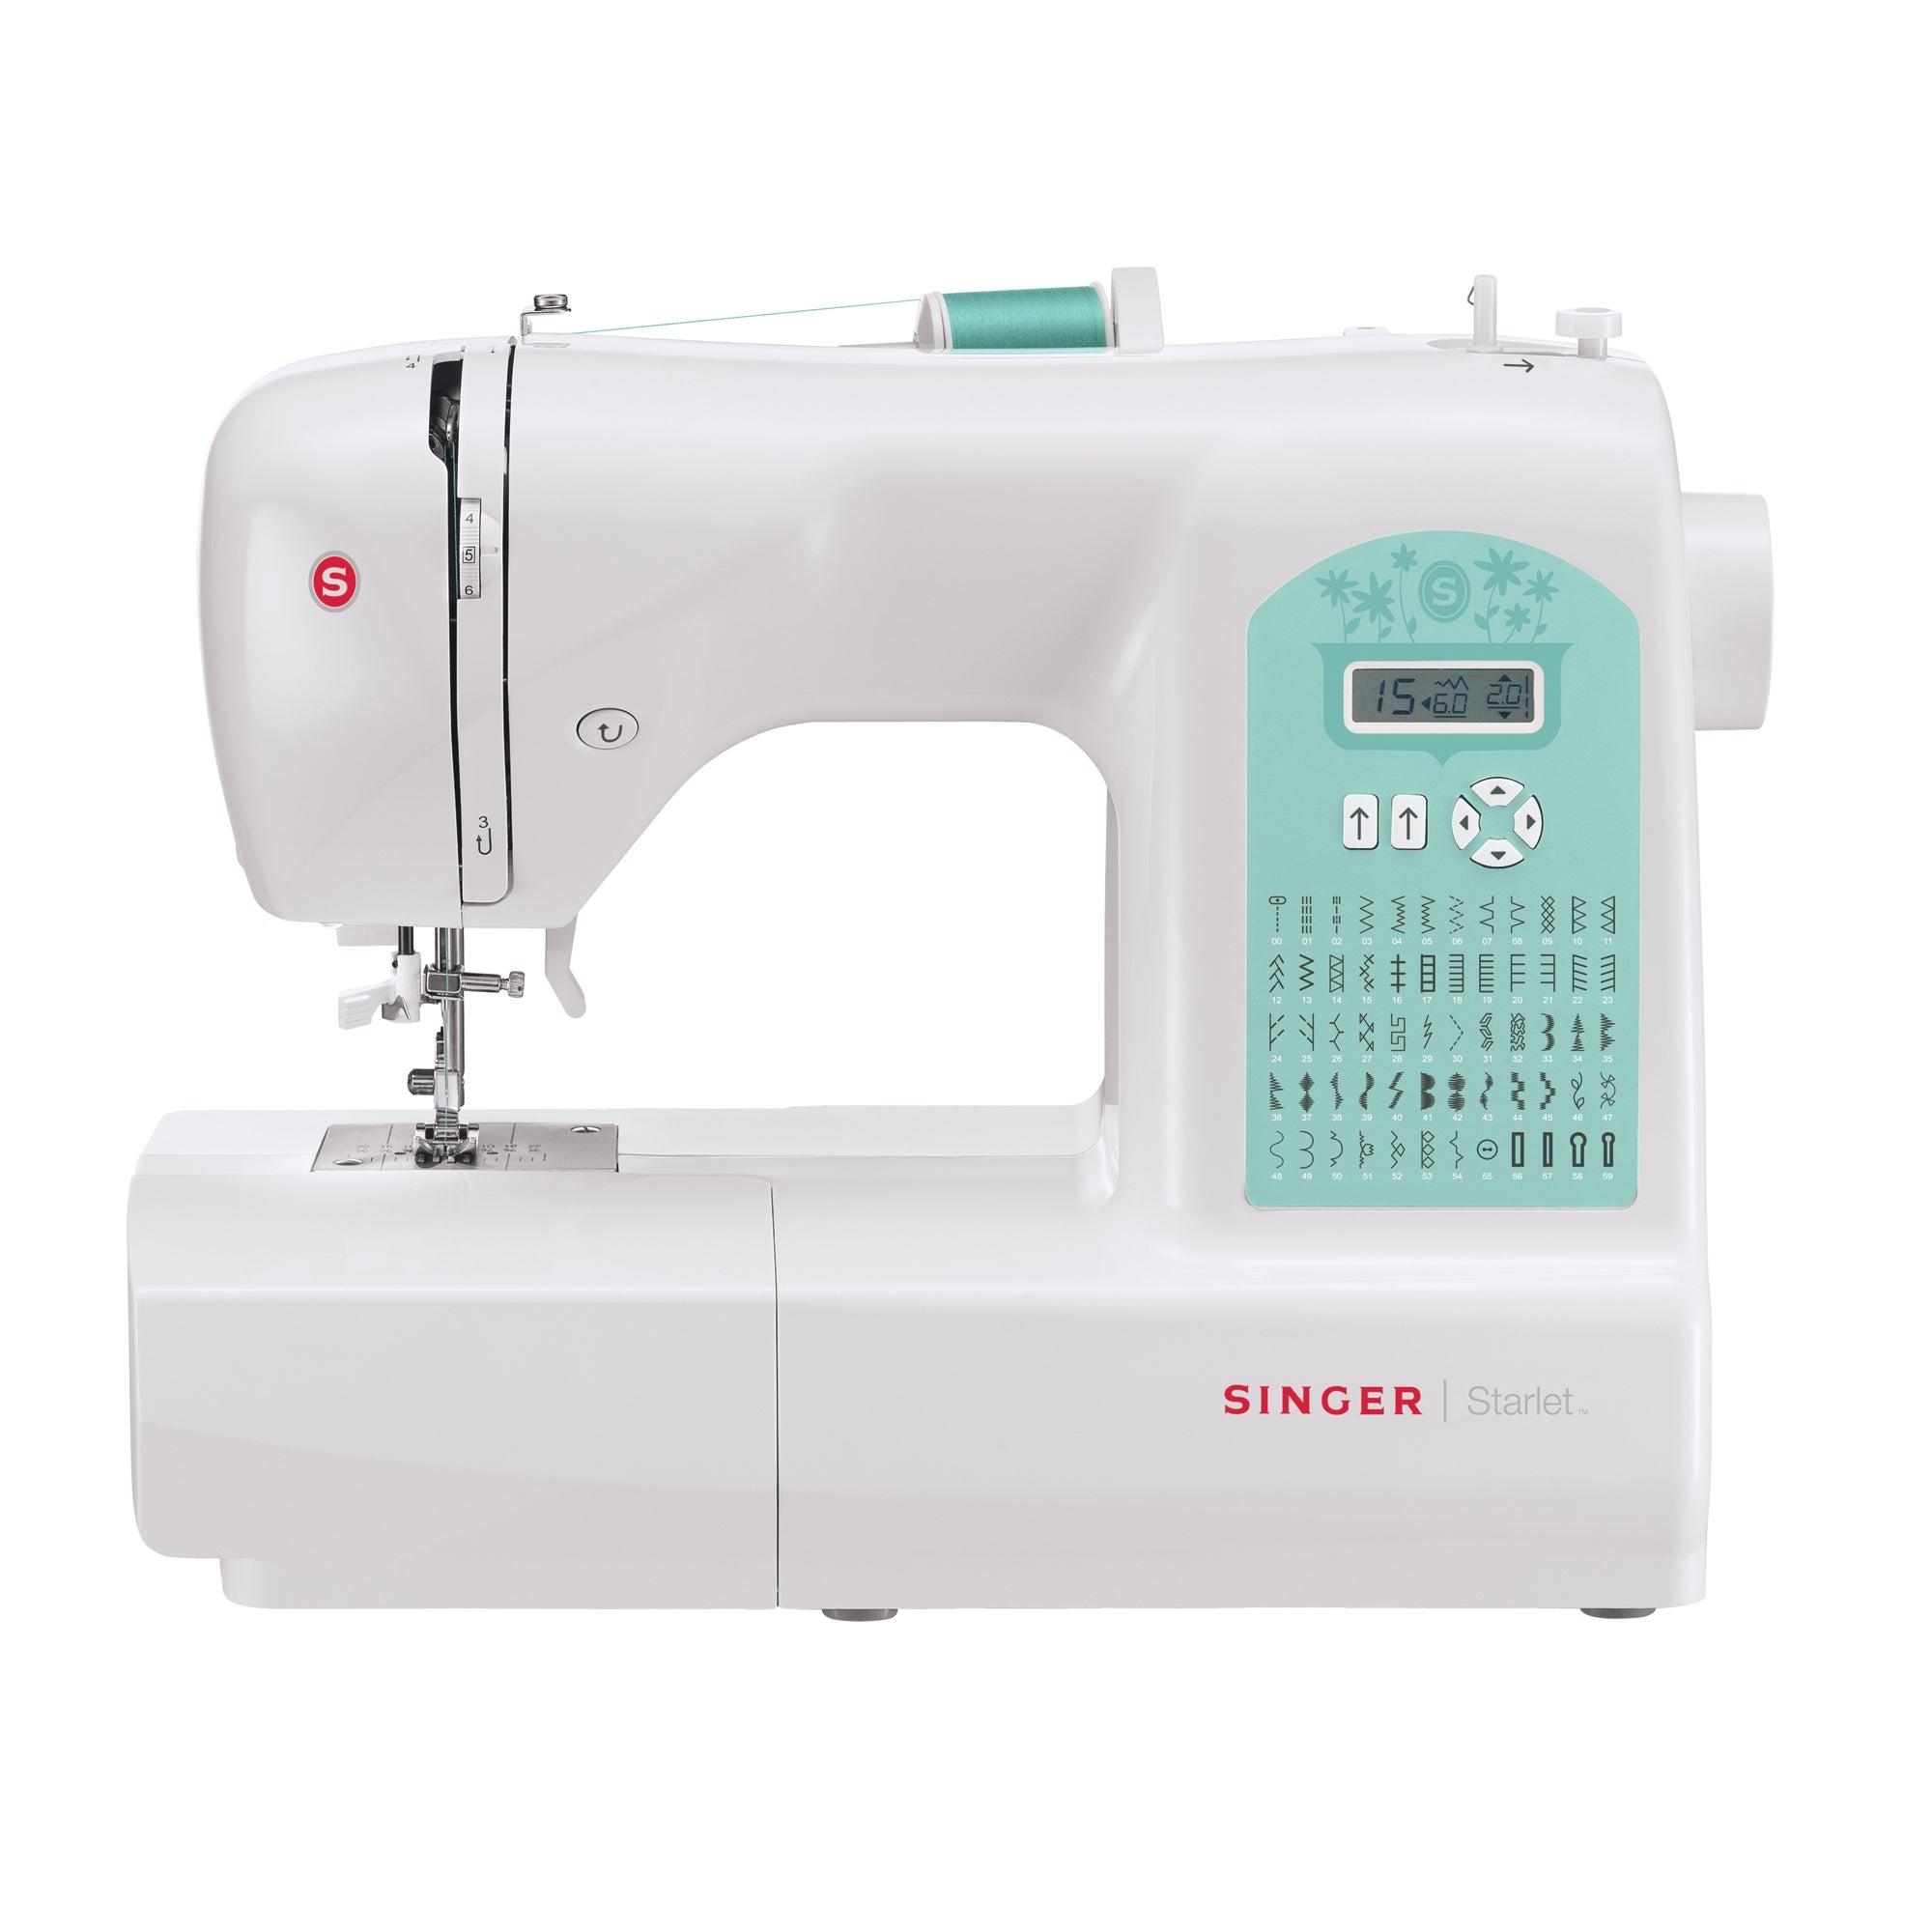 Singer Starlet 6660 Sewing Machine White